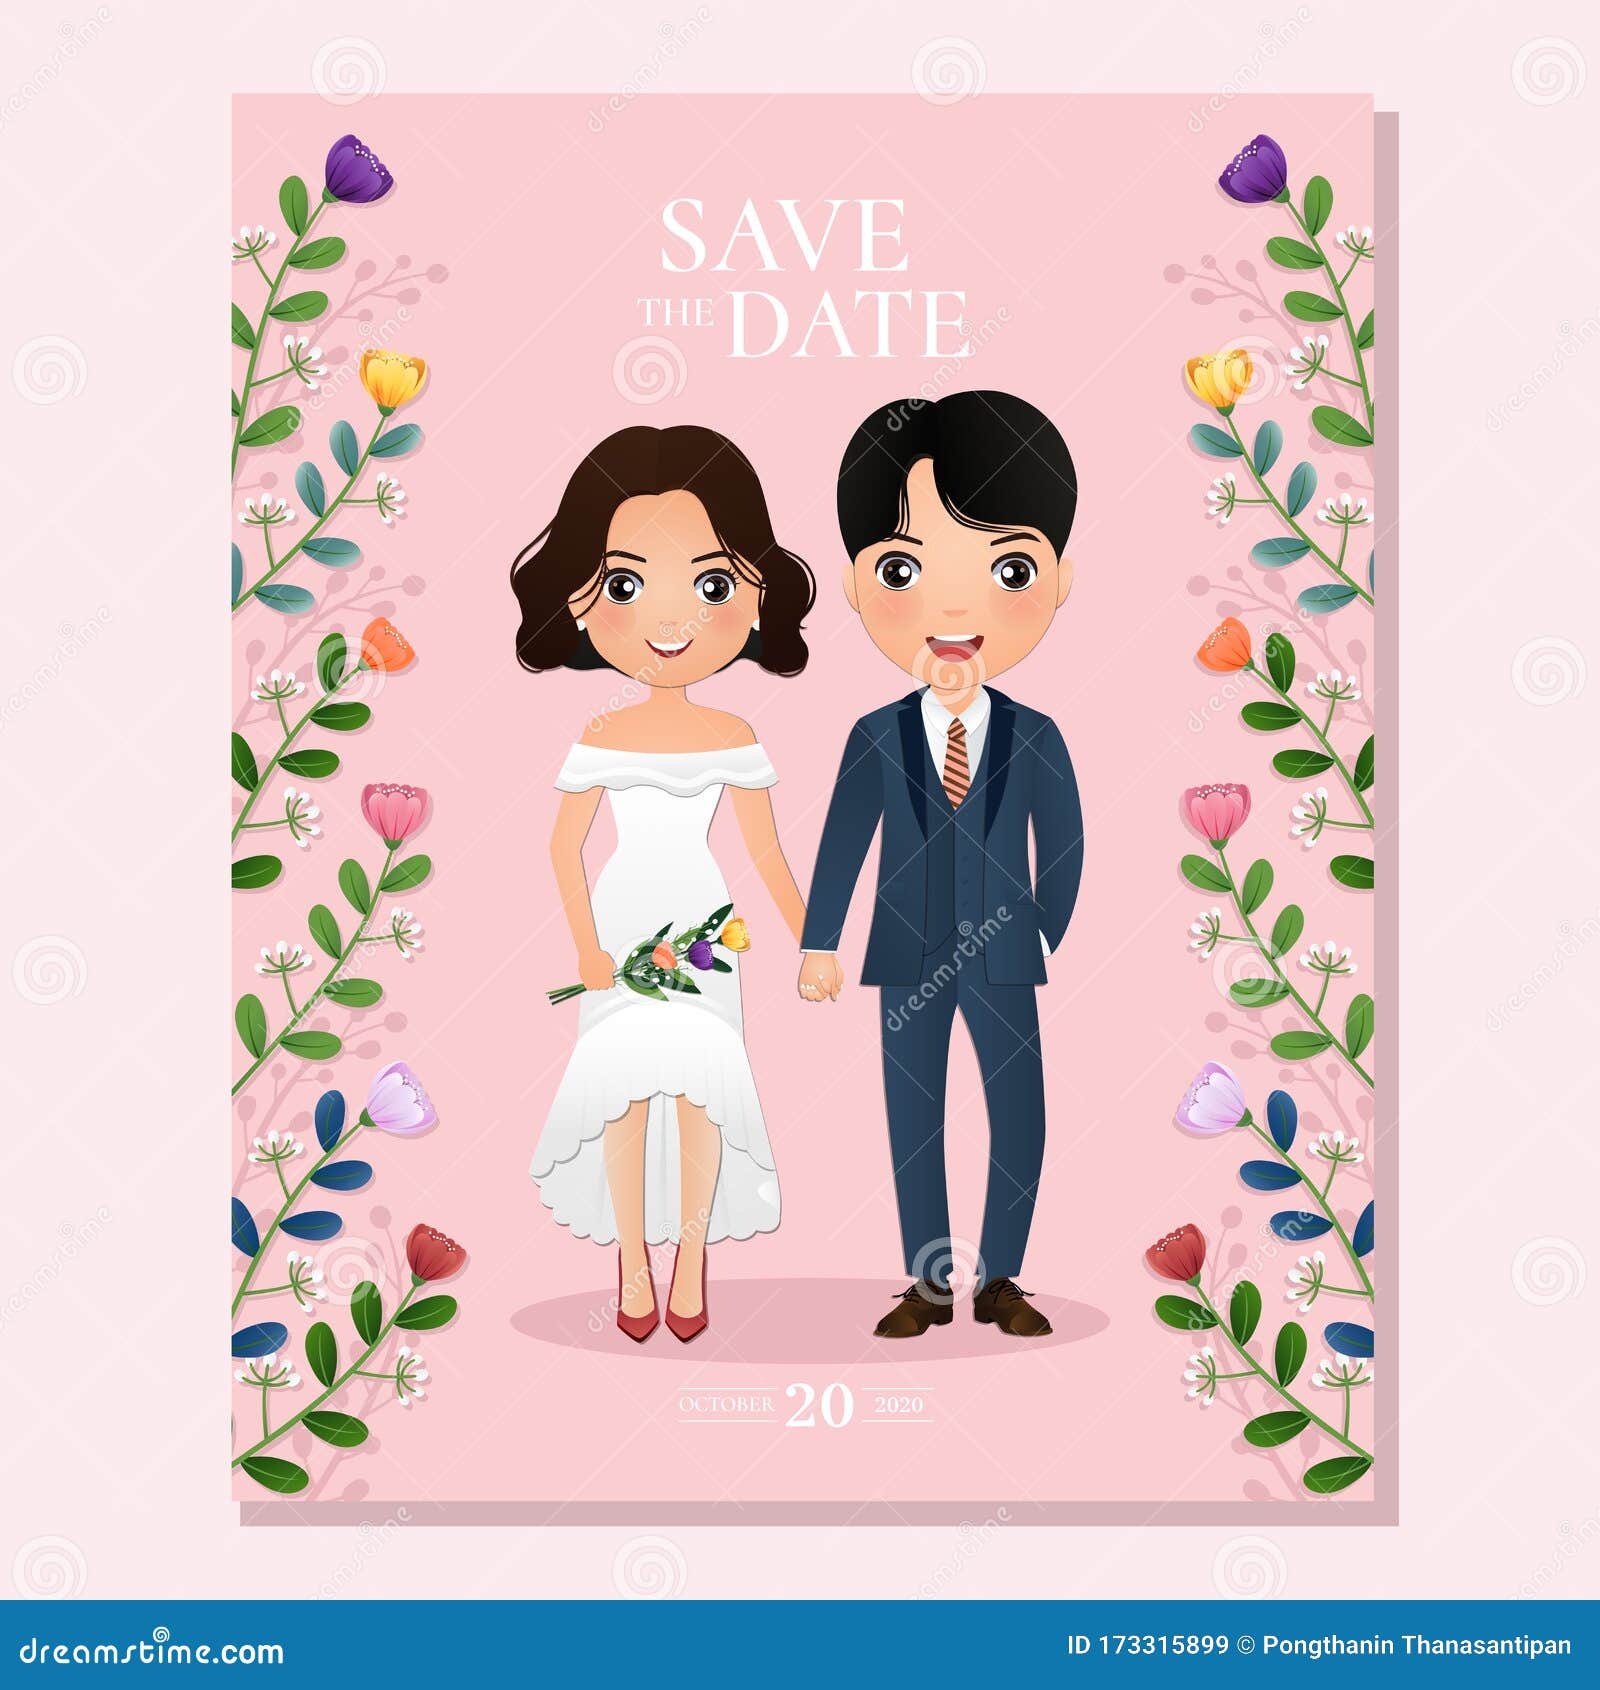 Wedding Invitation Card the Bride and Groom Cute Couple Cartoon   Vector Illustration for Event Celebration Stock Illustration - Illustration  of graphic, couple: 173315899